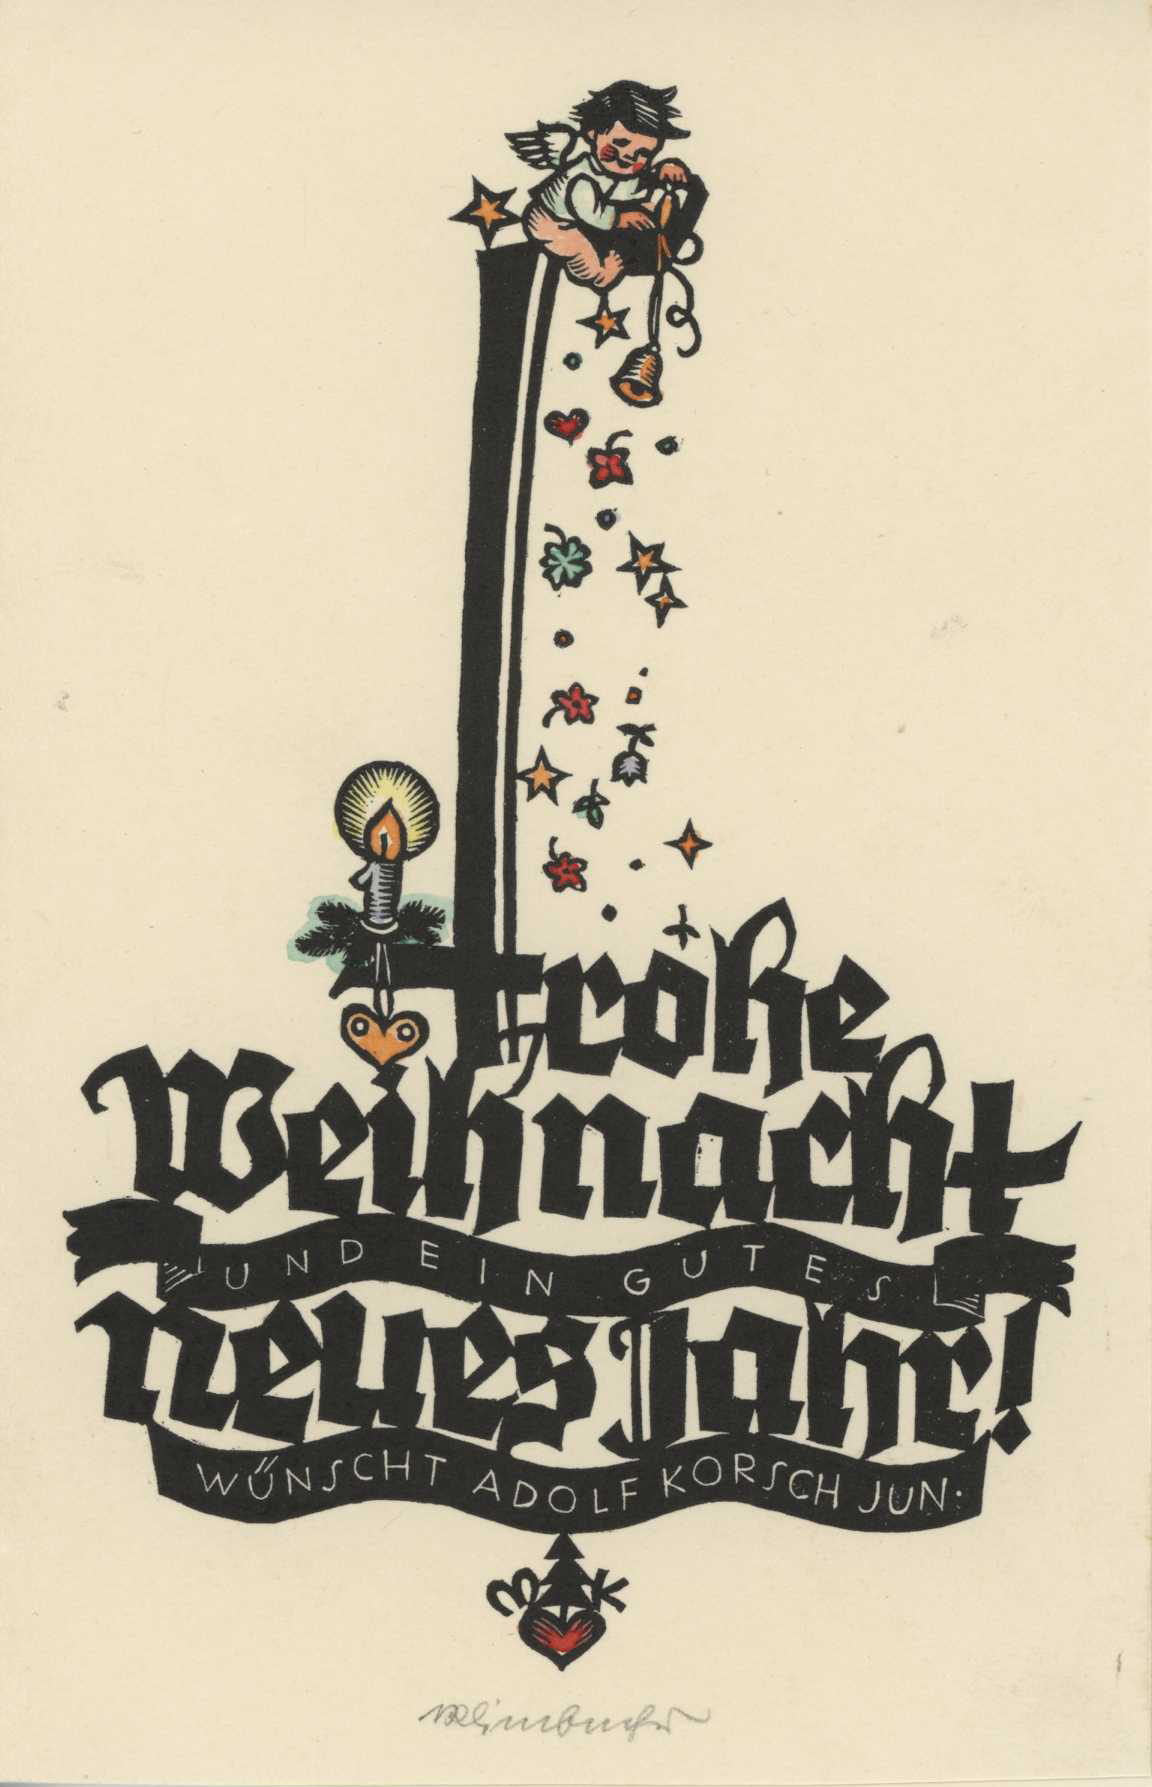 Featured image for “Frohe Weinacht - Adolf Korsch”